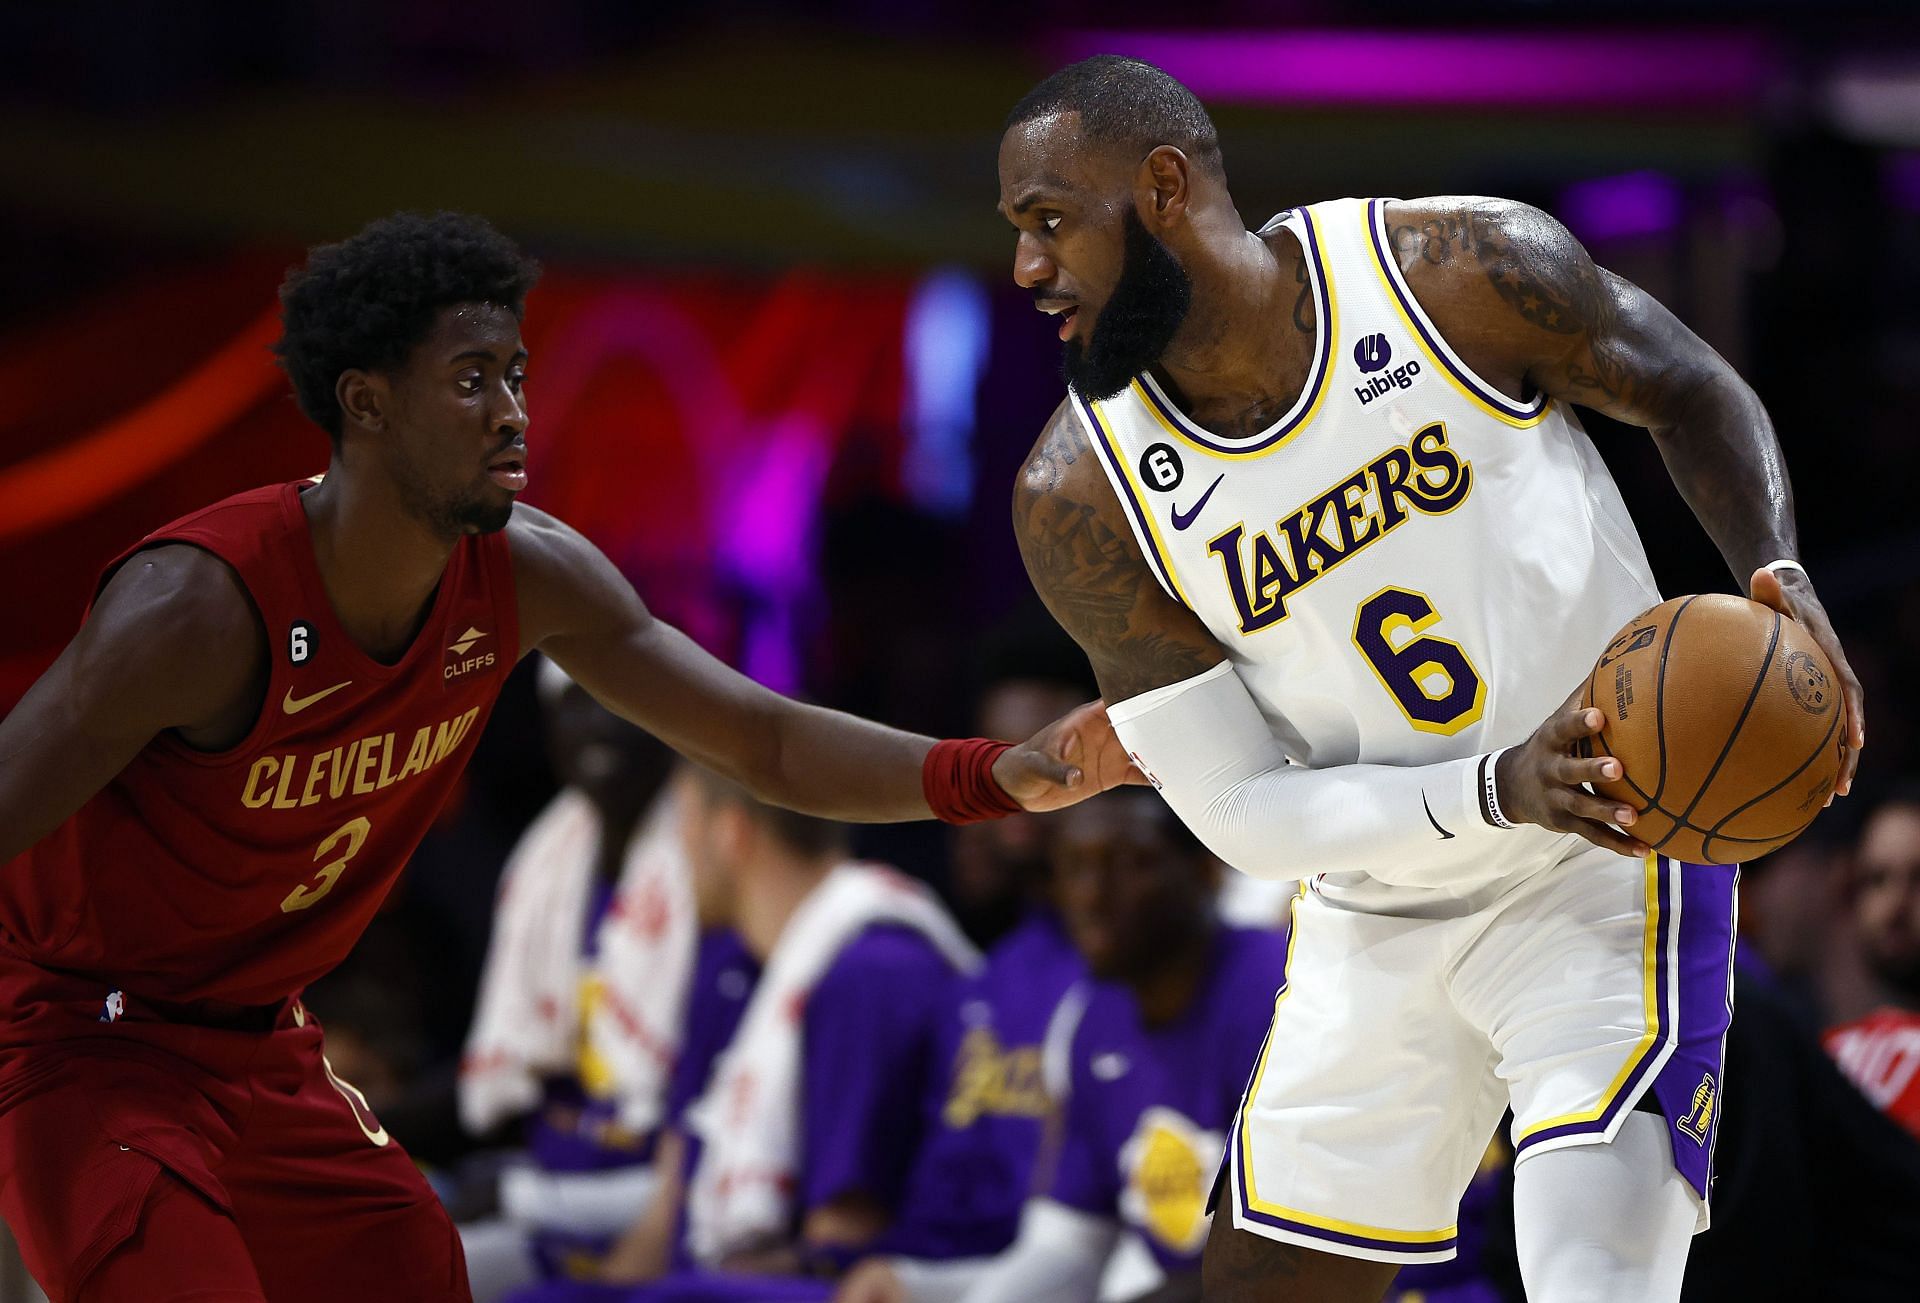 LA Lakers struggled against Cleveland Cavaliers